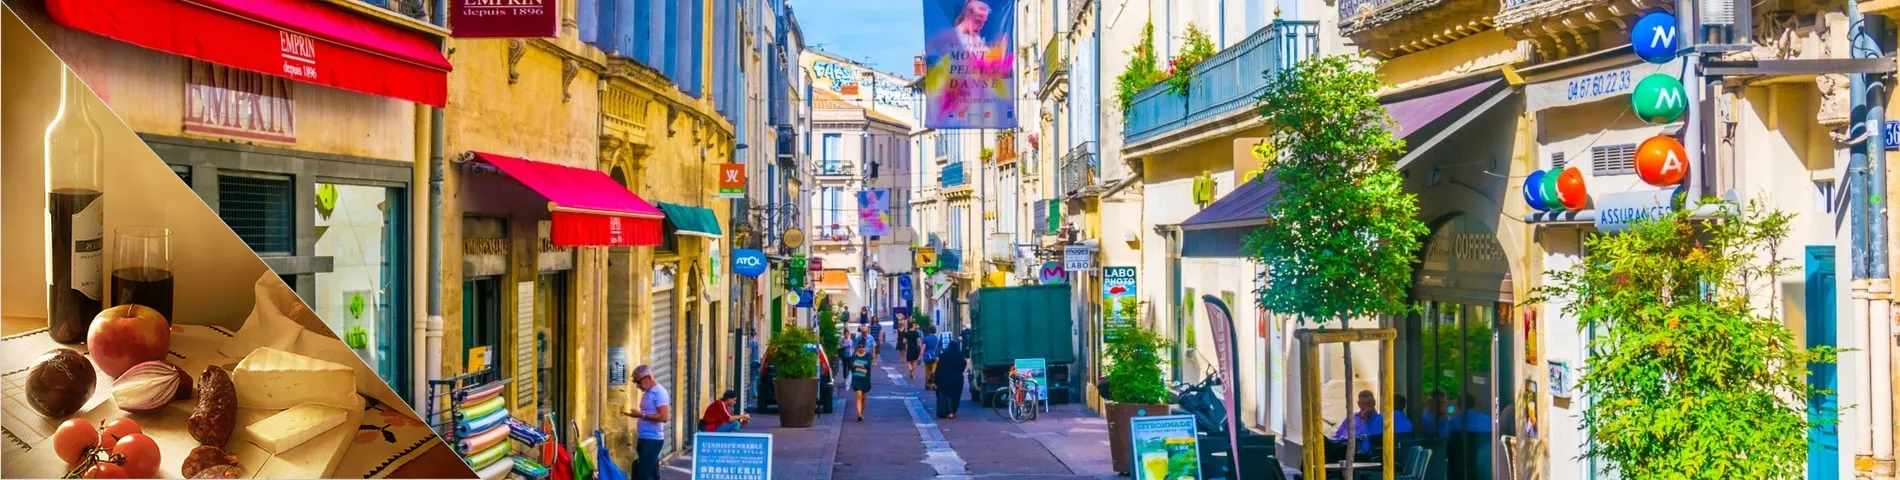 Montpellier - Francese & Cultura